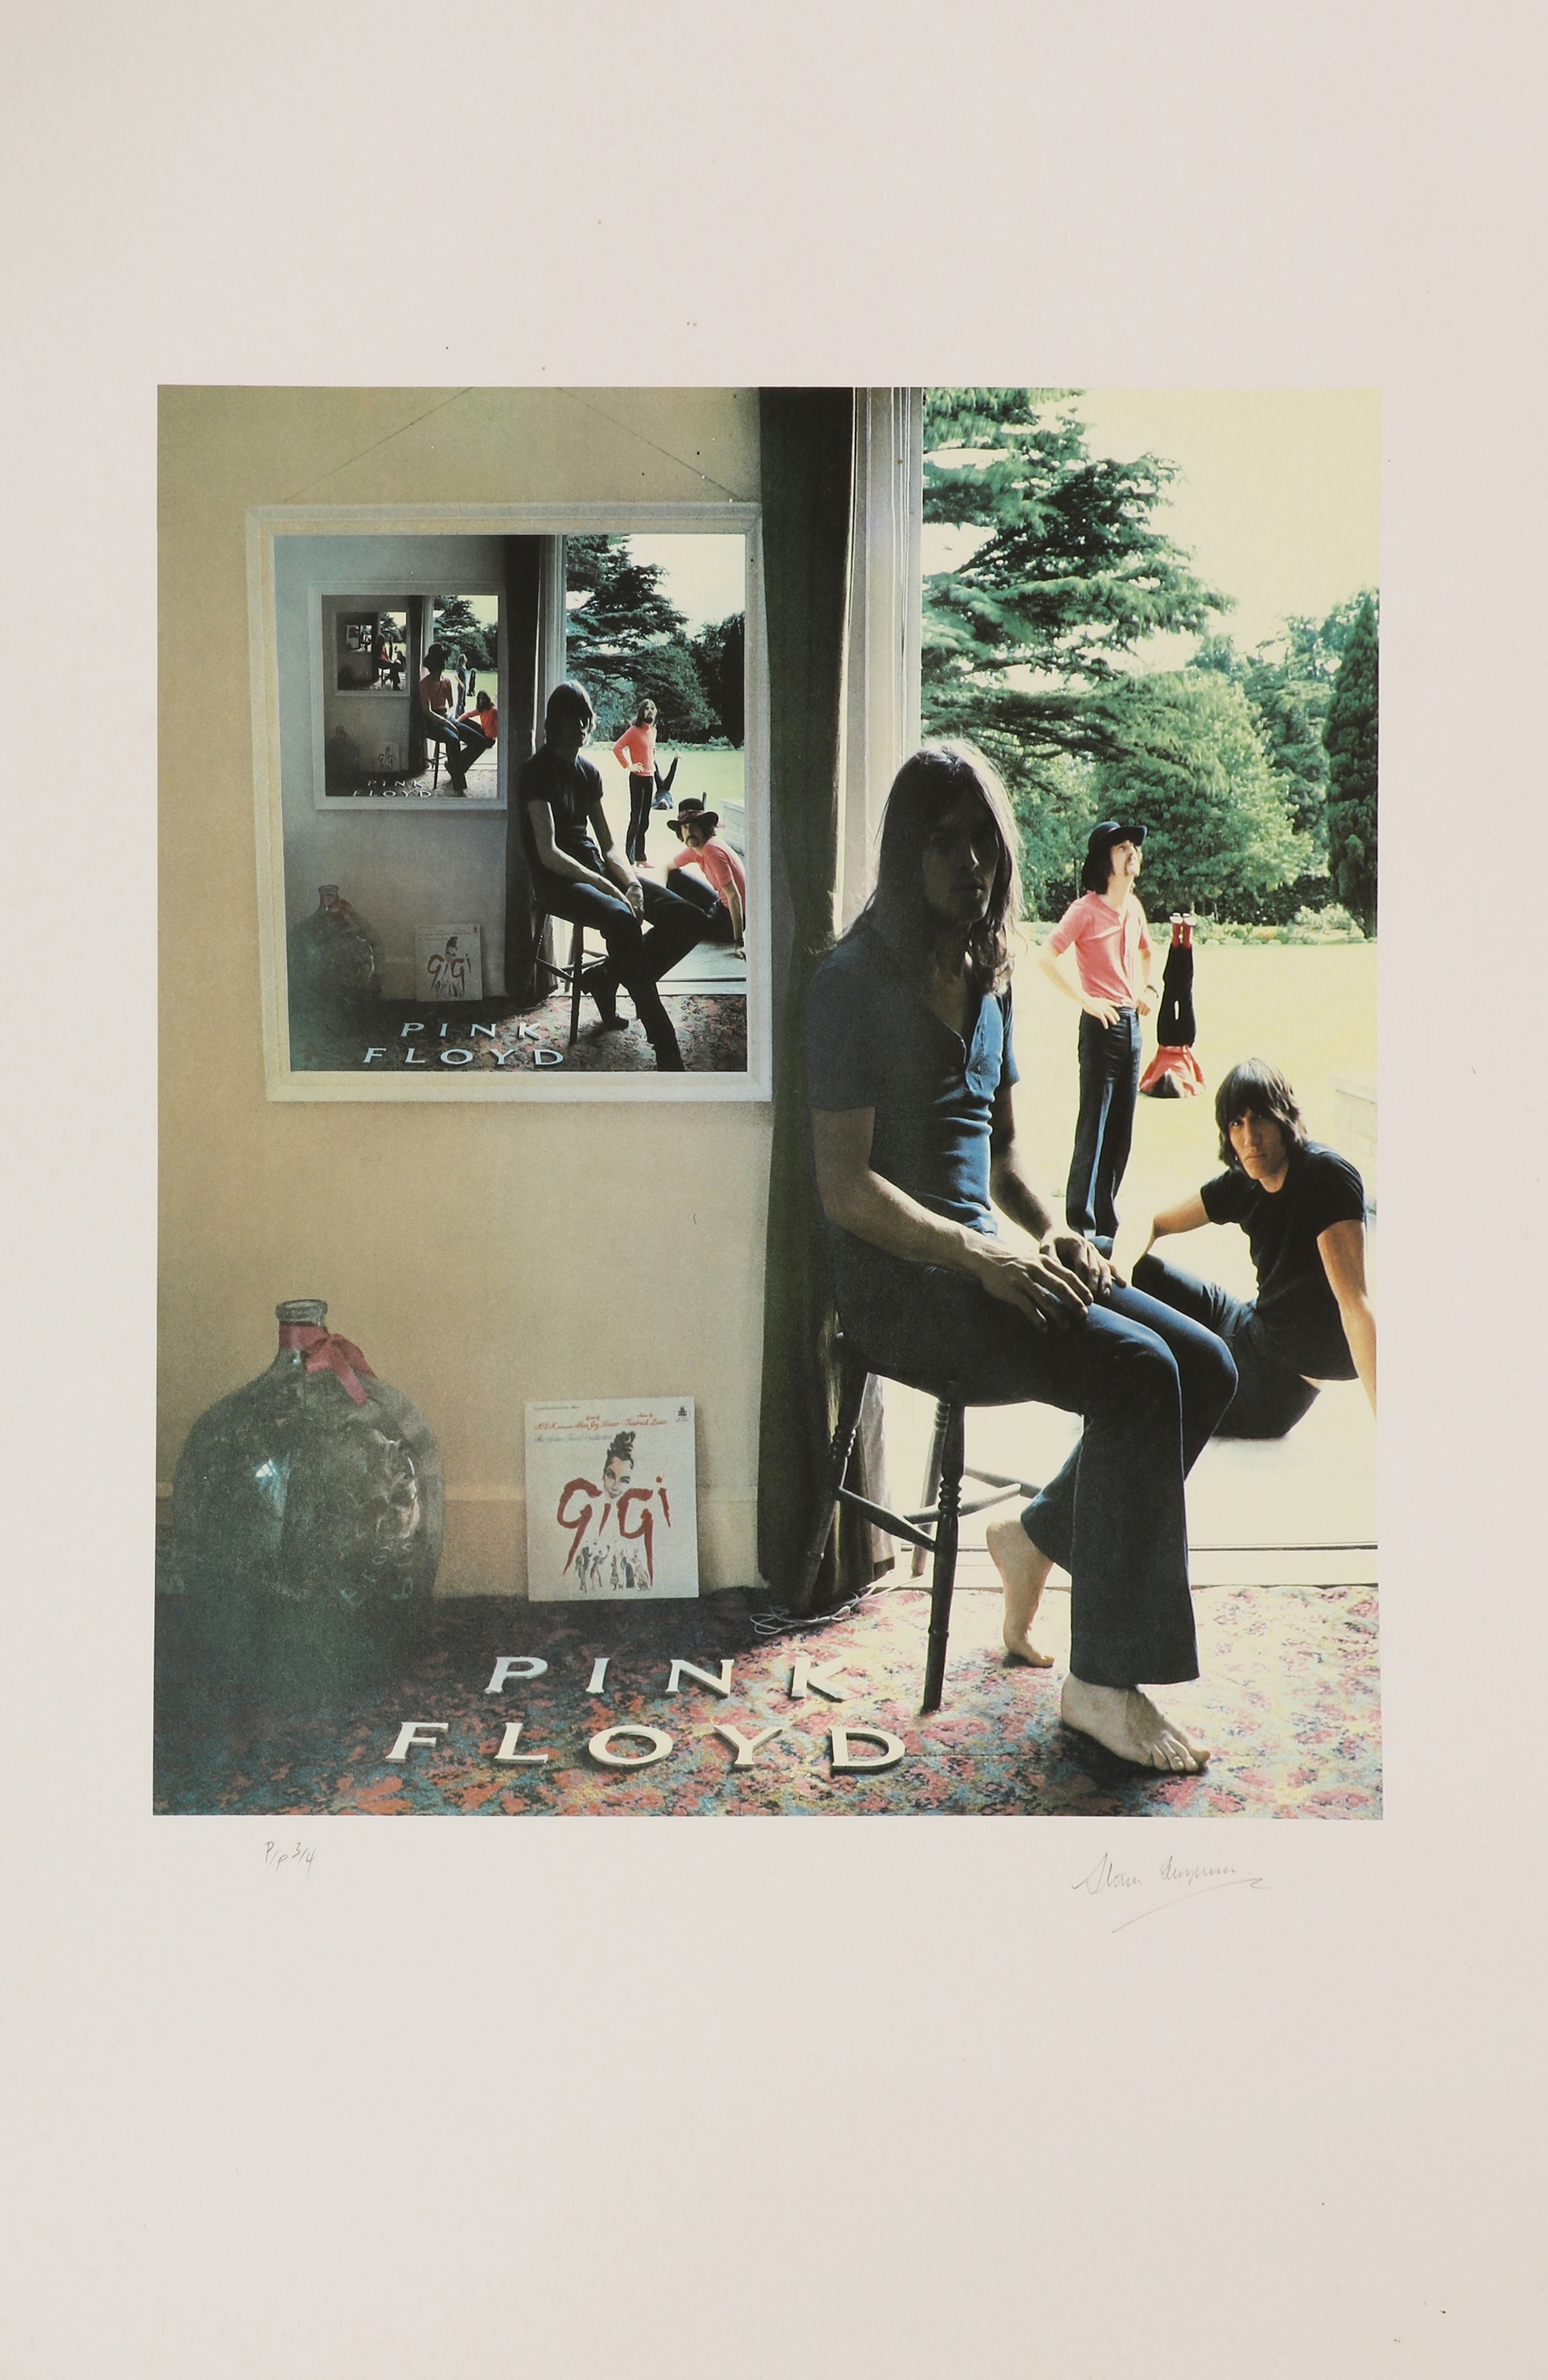 Best Pink Floyd Album Covers: 20 Artworks Ranked And Reviewed - Dig!